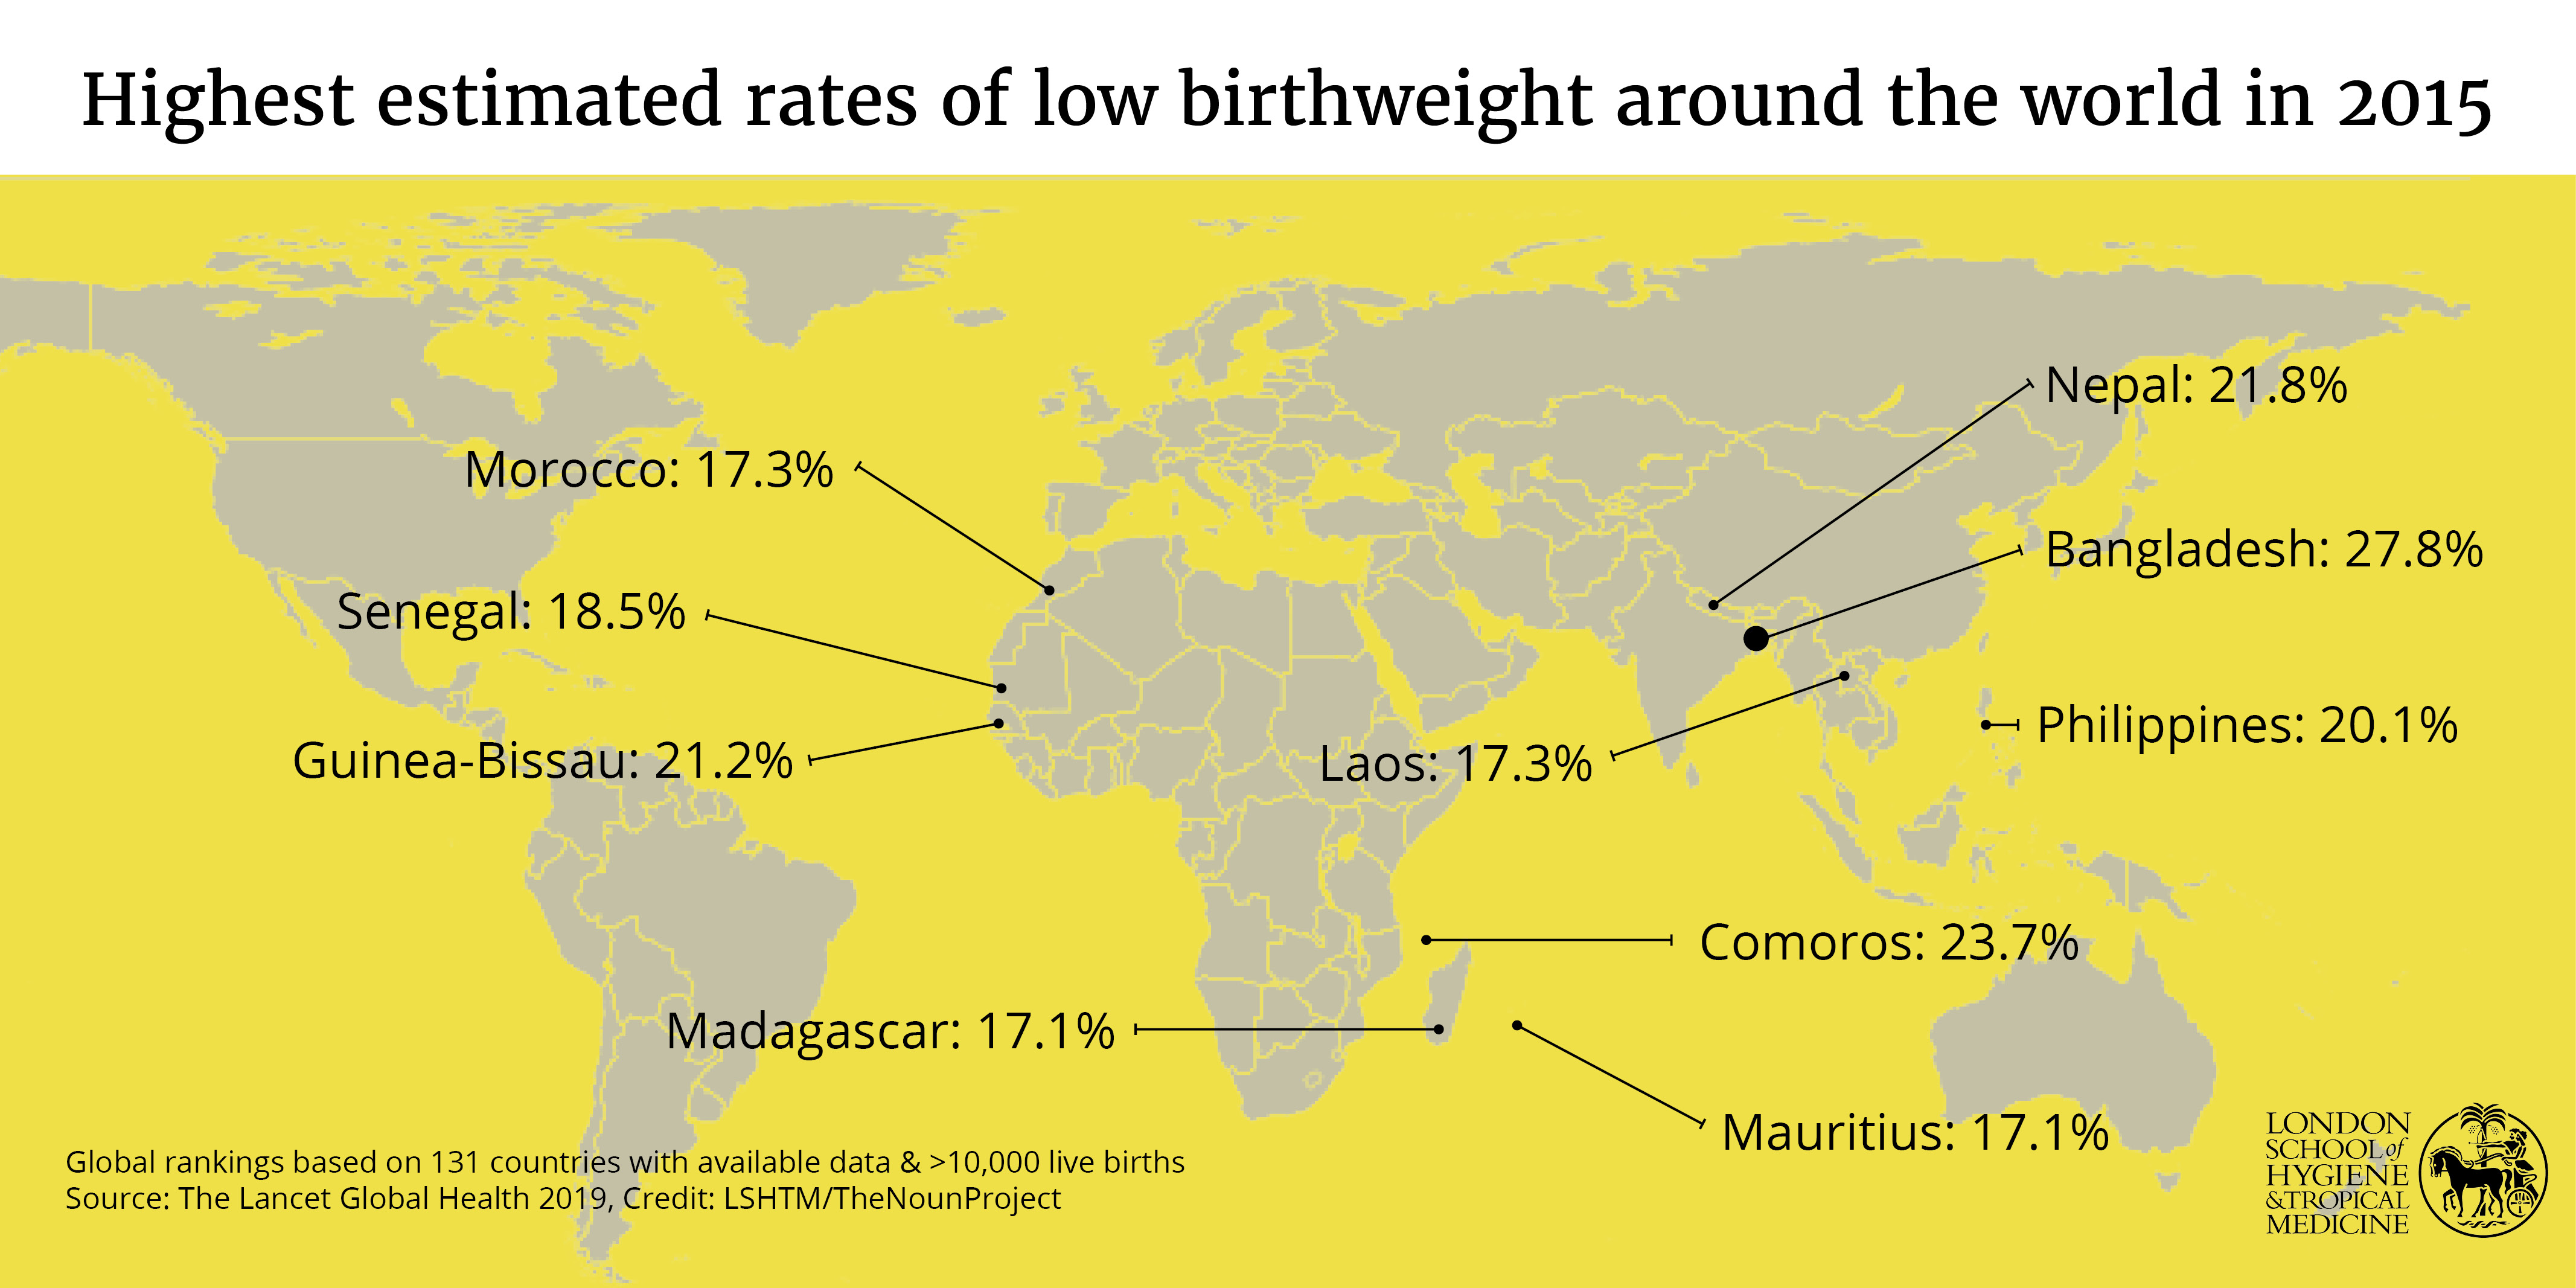 Highest estimated rates of low birthweight around the world